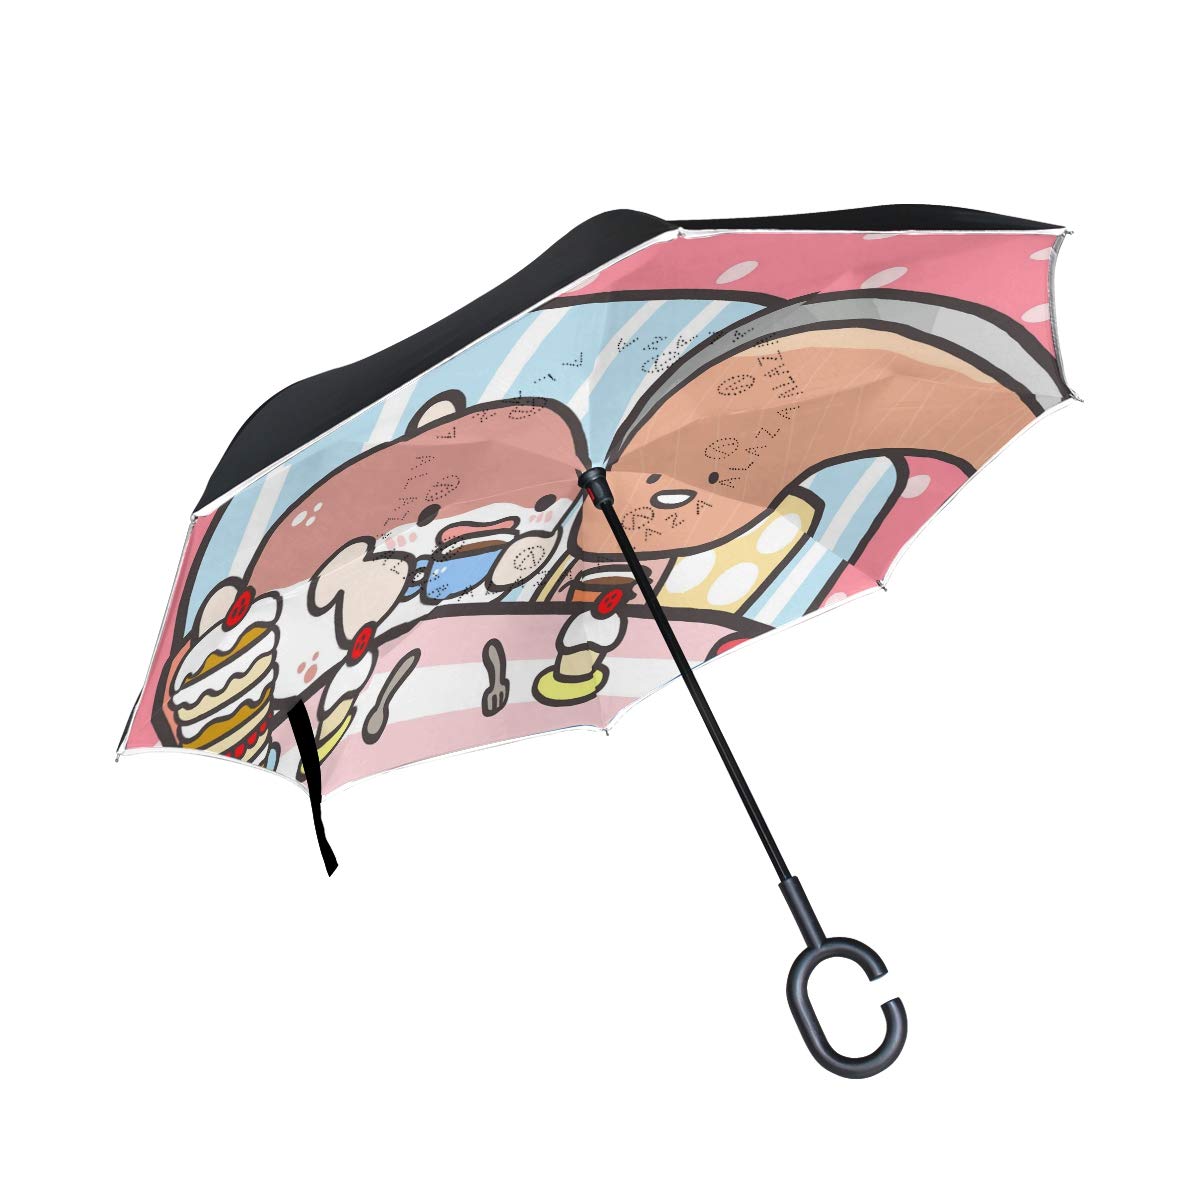 Amazoncom inverted umbrella.